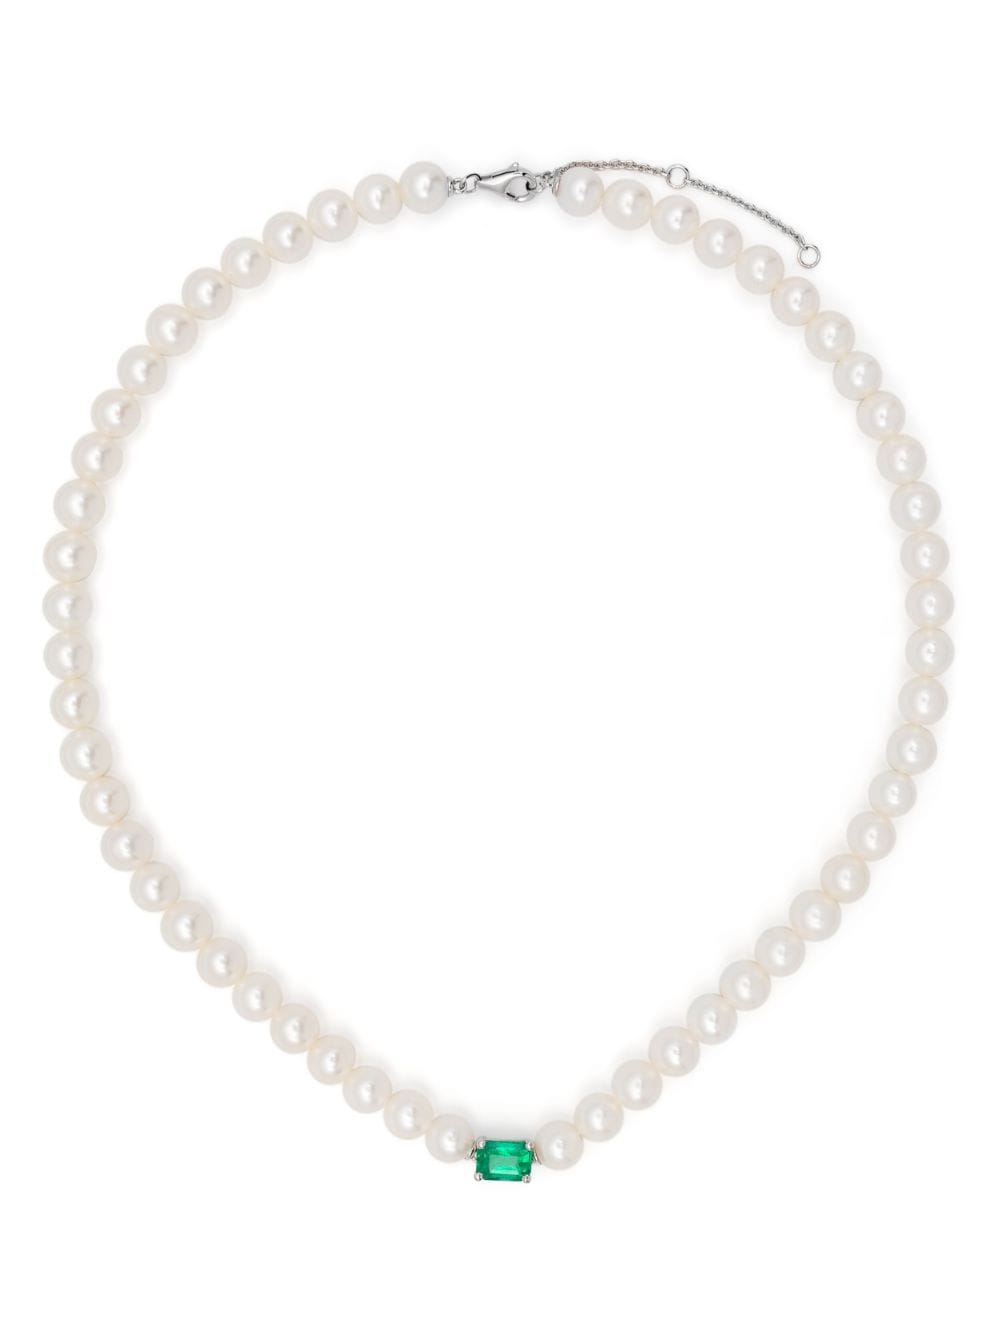 Yvonne Léon 18kt white gold Collier Perles pearl and emerald choker von Yvonne Léon